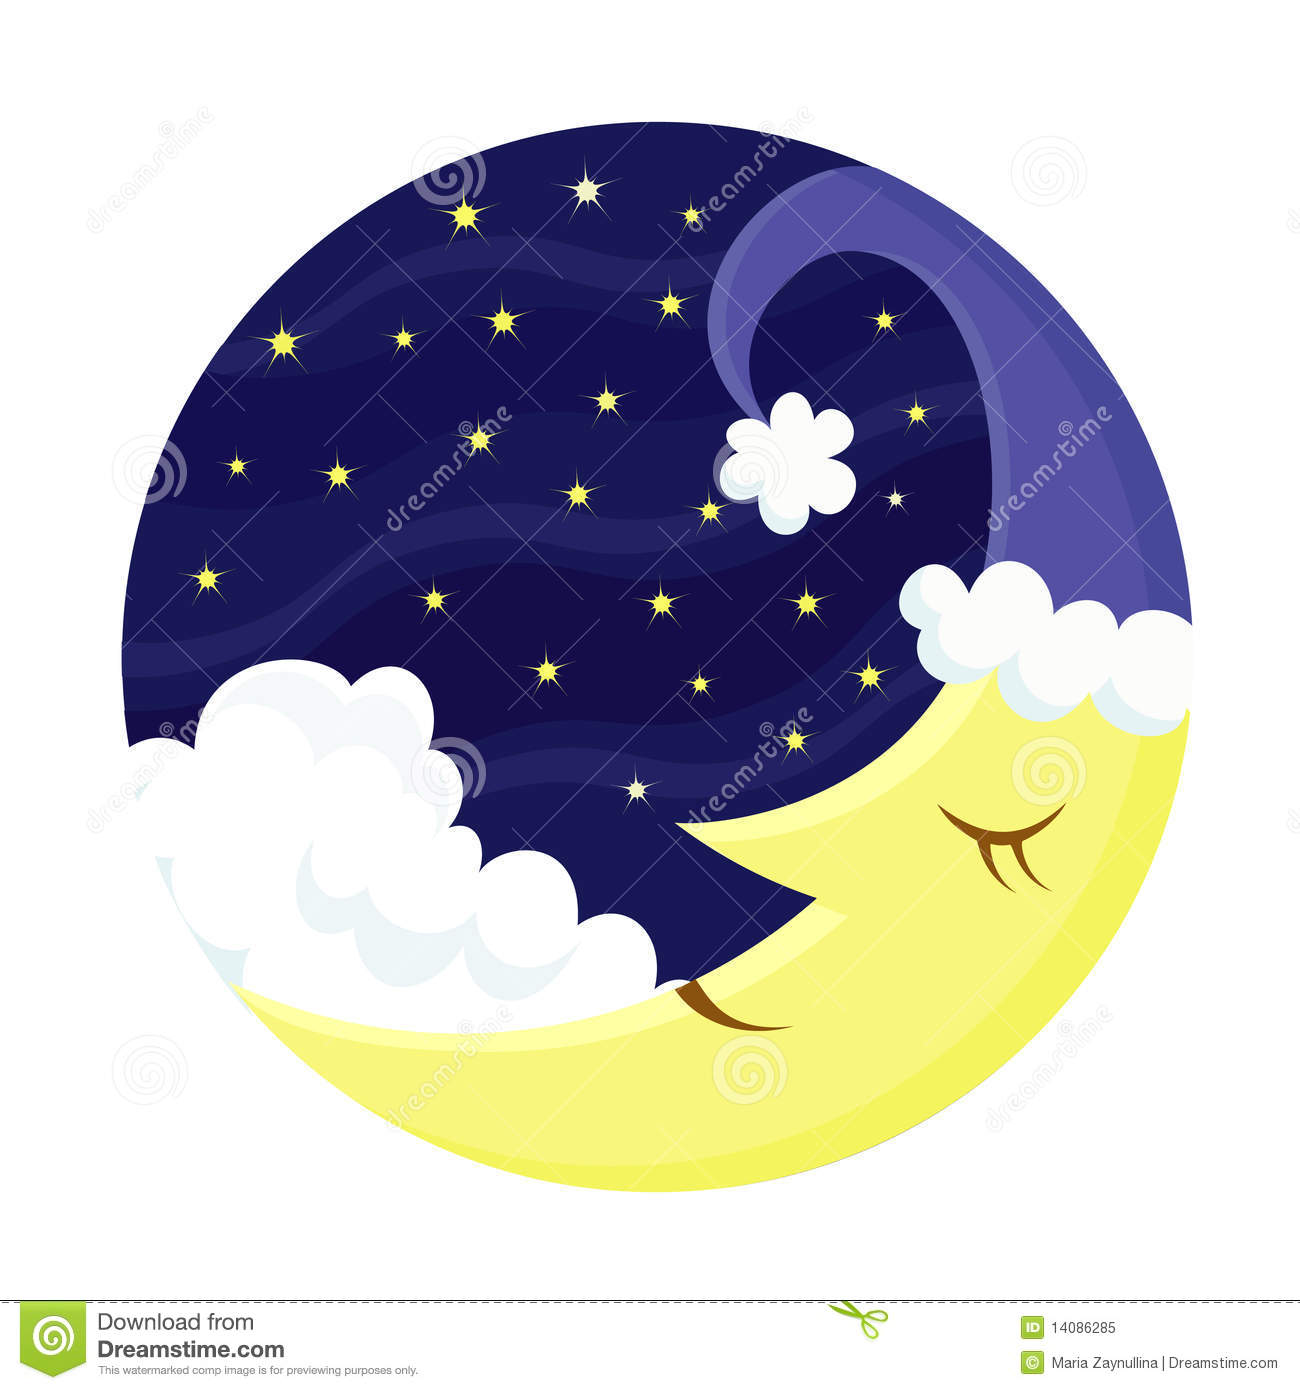 Cute Sleeping Moon Royalty Free Stock Photo   Image  14086285